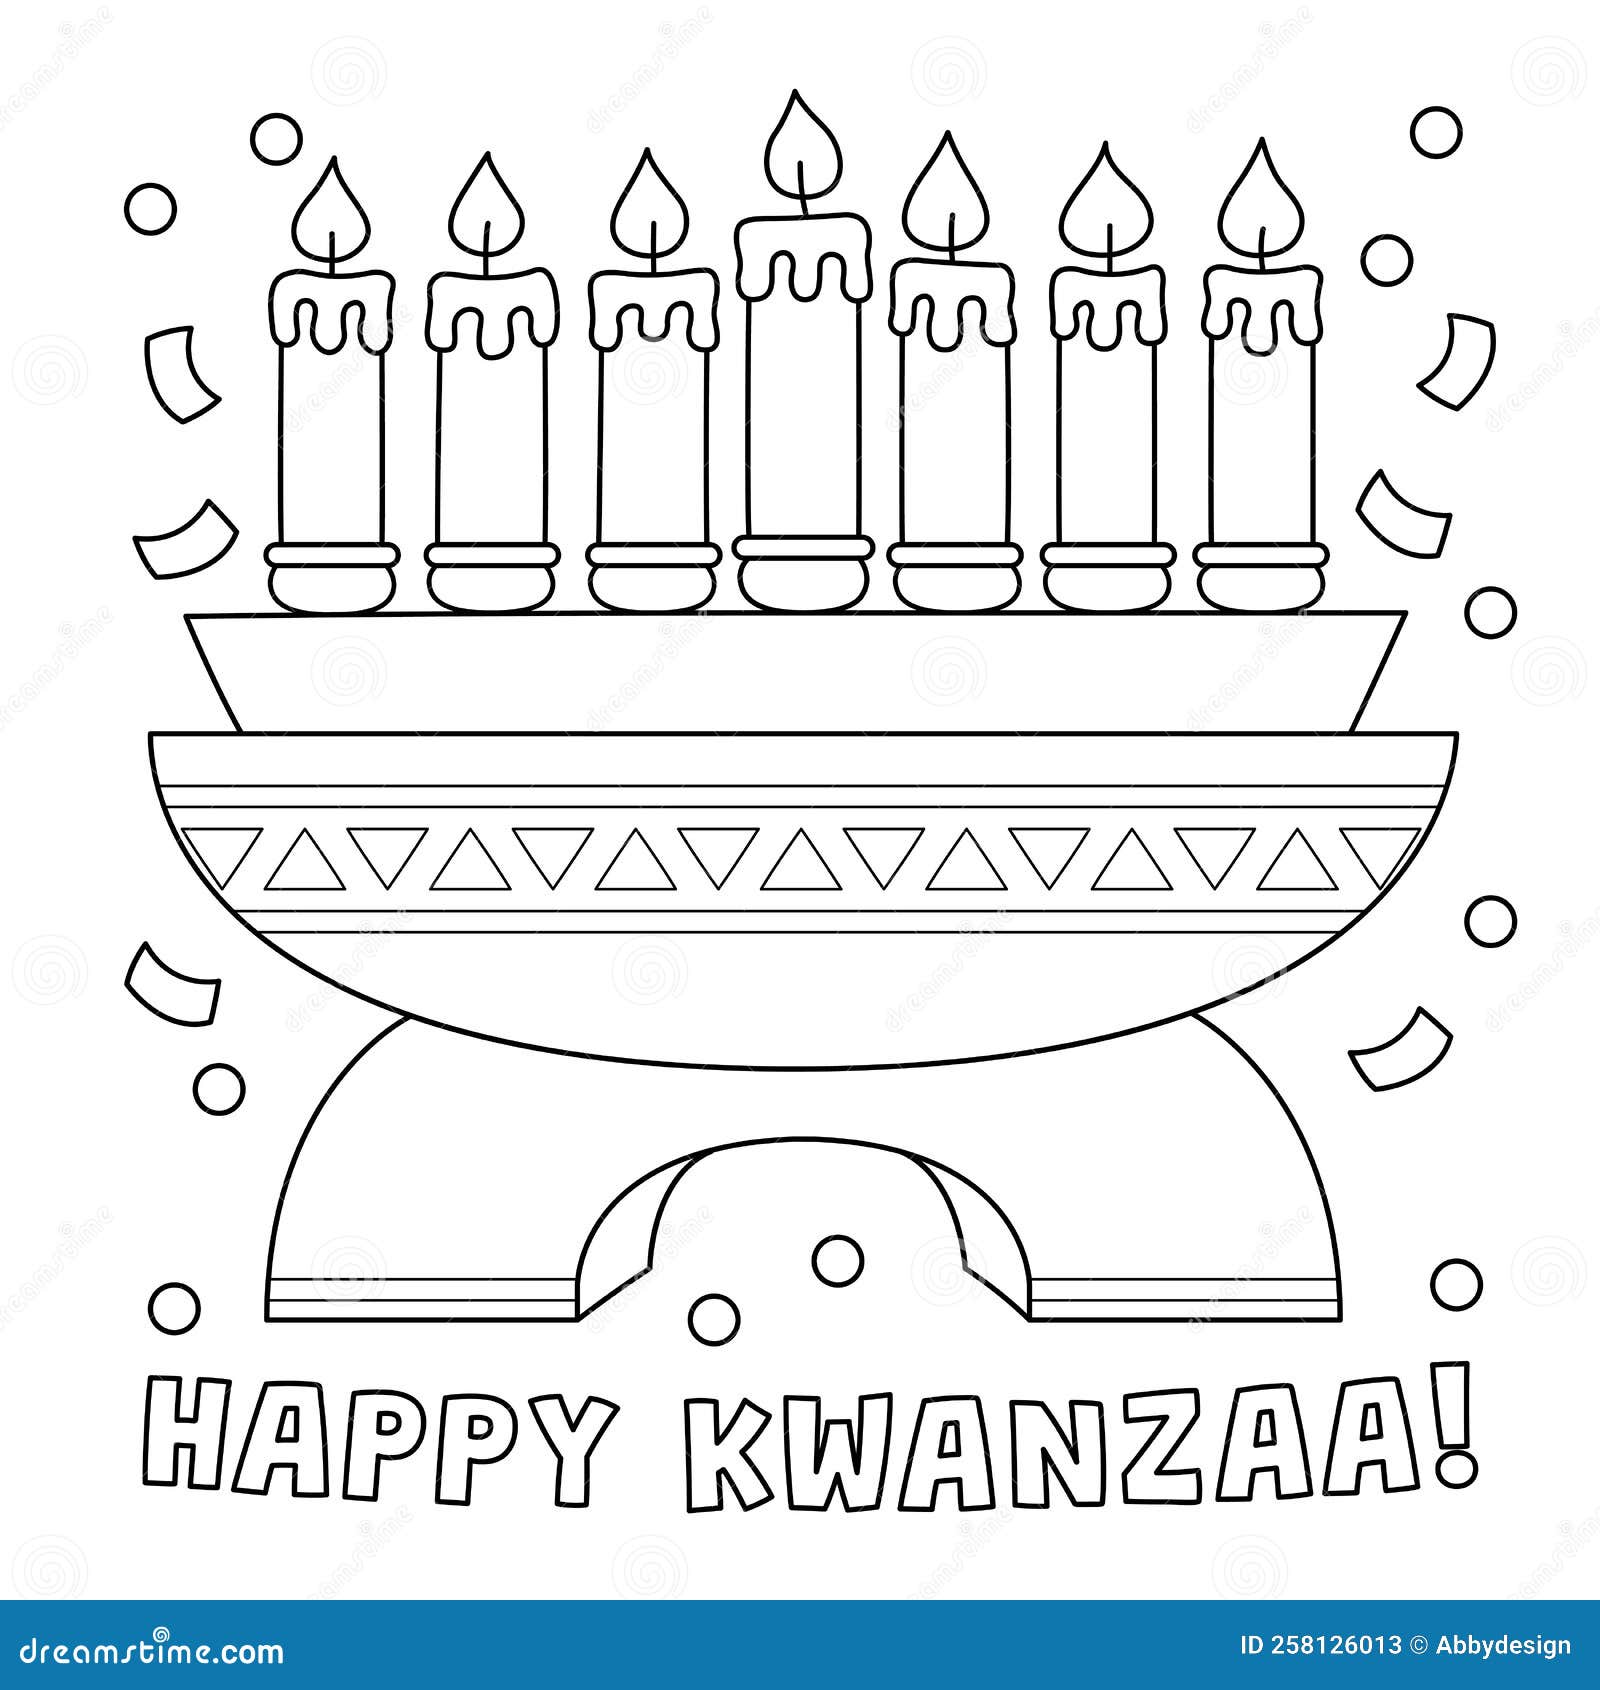 Happy kwanzaa kinara coloring page for kids stock vector